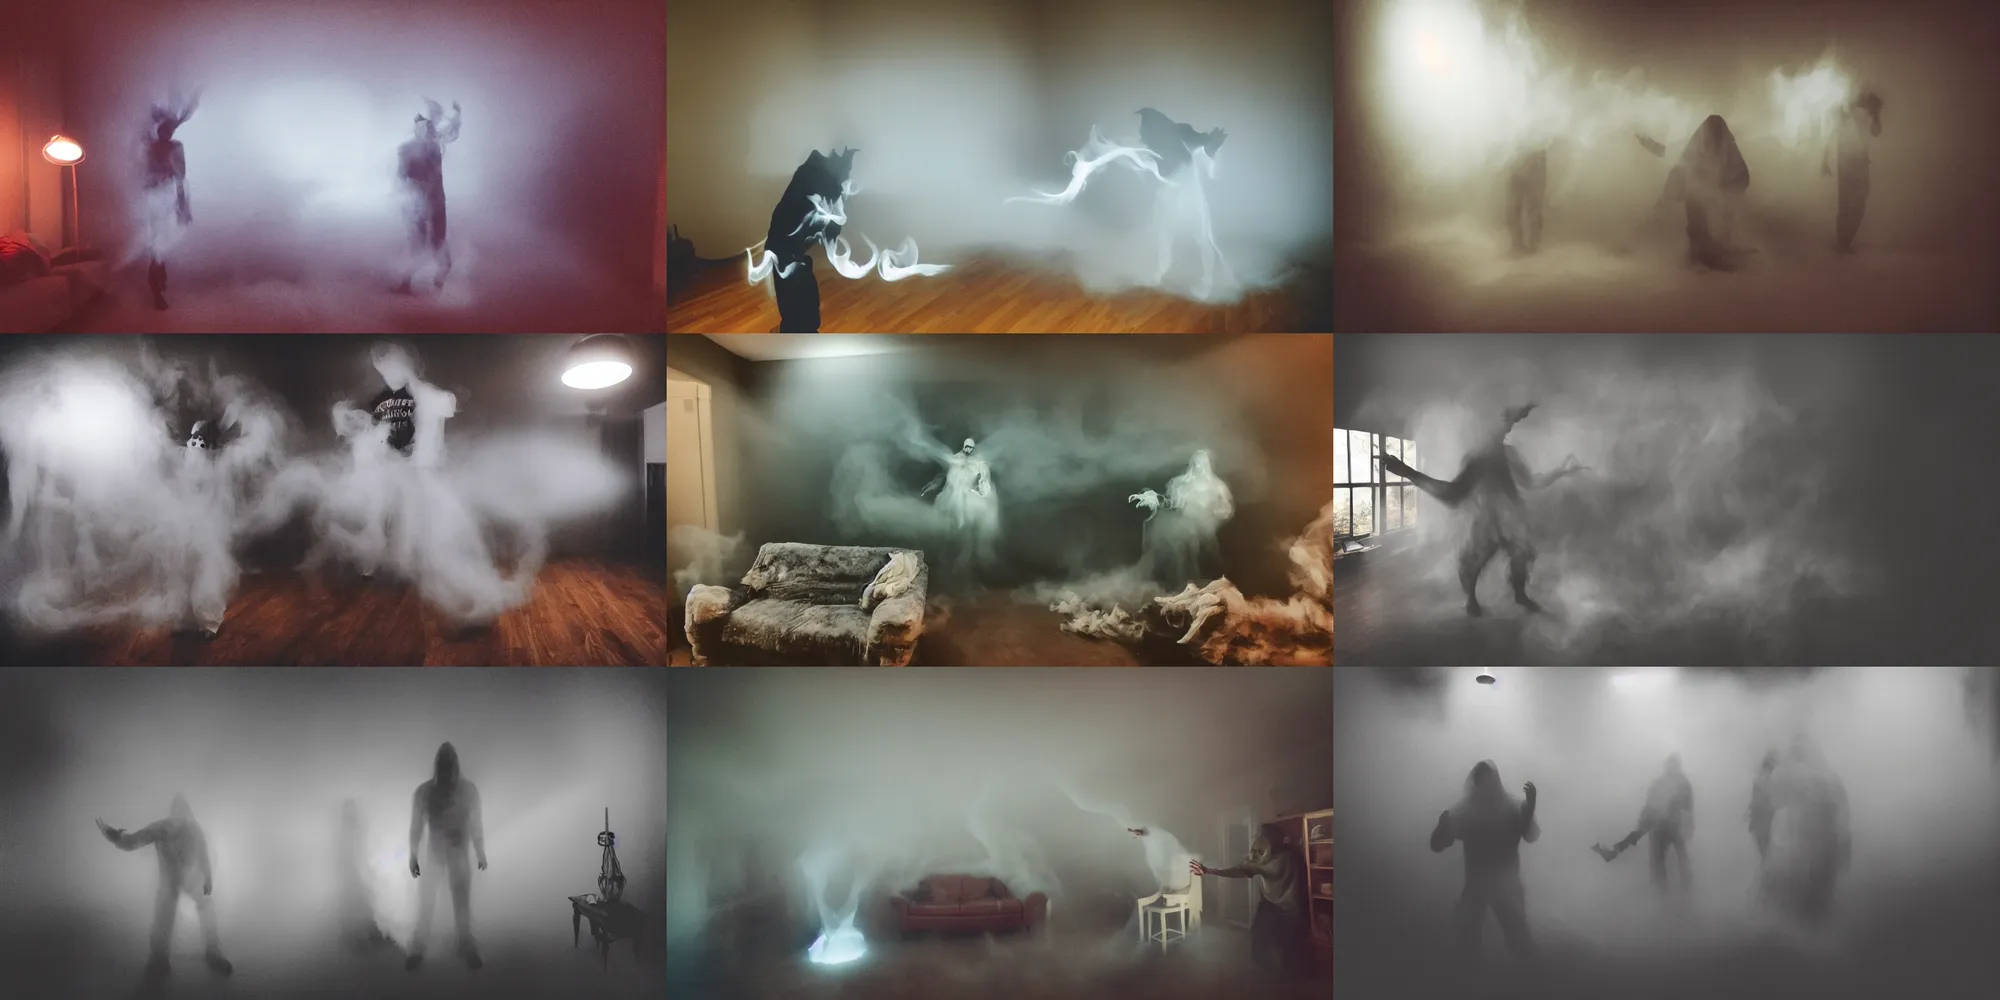 Prompt: kodak portra 4 0 0, horror demon evil transparent smoke fog spirit attacks in living room interior photo shot on iphone, dynamic pose, close body shot, sharp focus, grainy, corpse, paranormal, long exposure, flashlight, night, total darkness, poltergeist, aberrations,